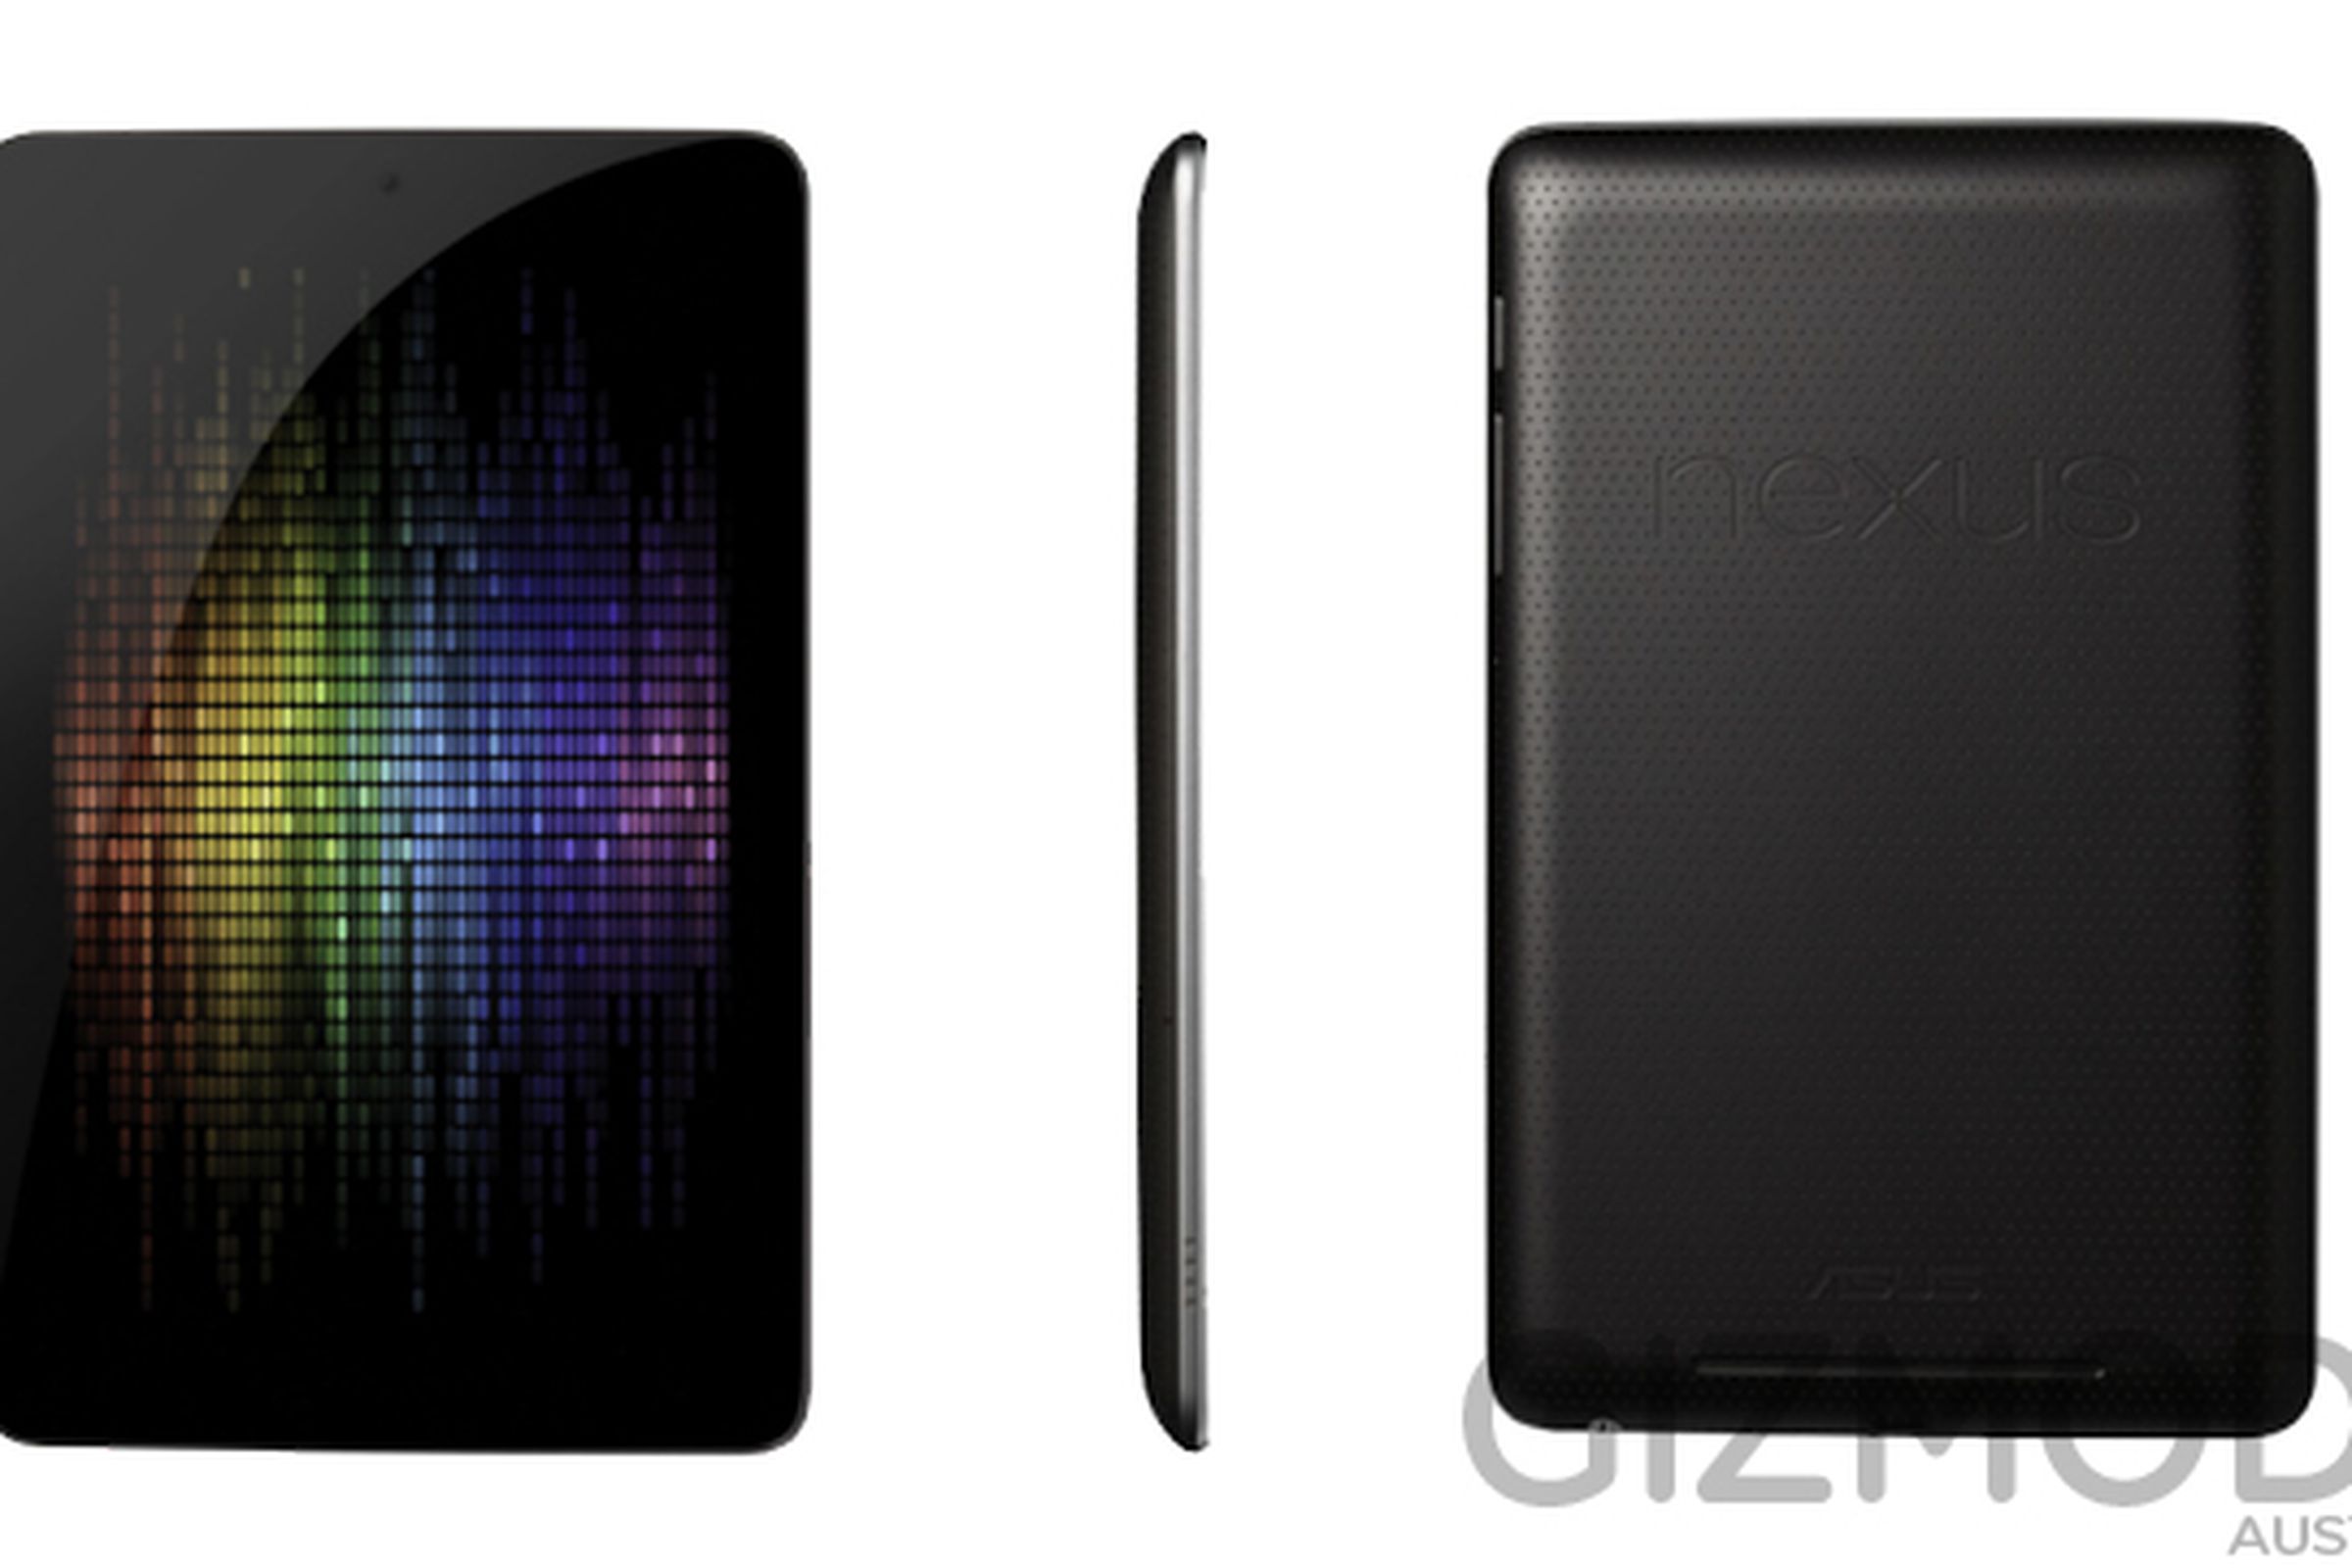 Gizmodo Nexus 7 tablet (full size)